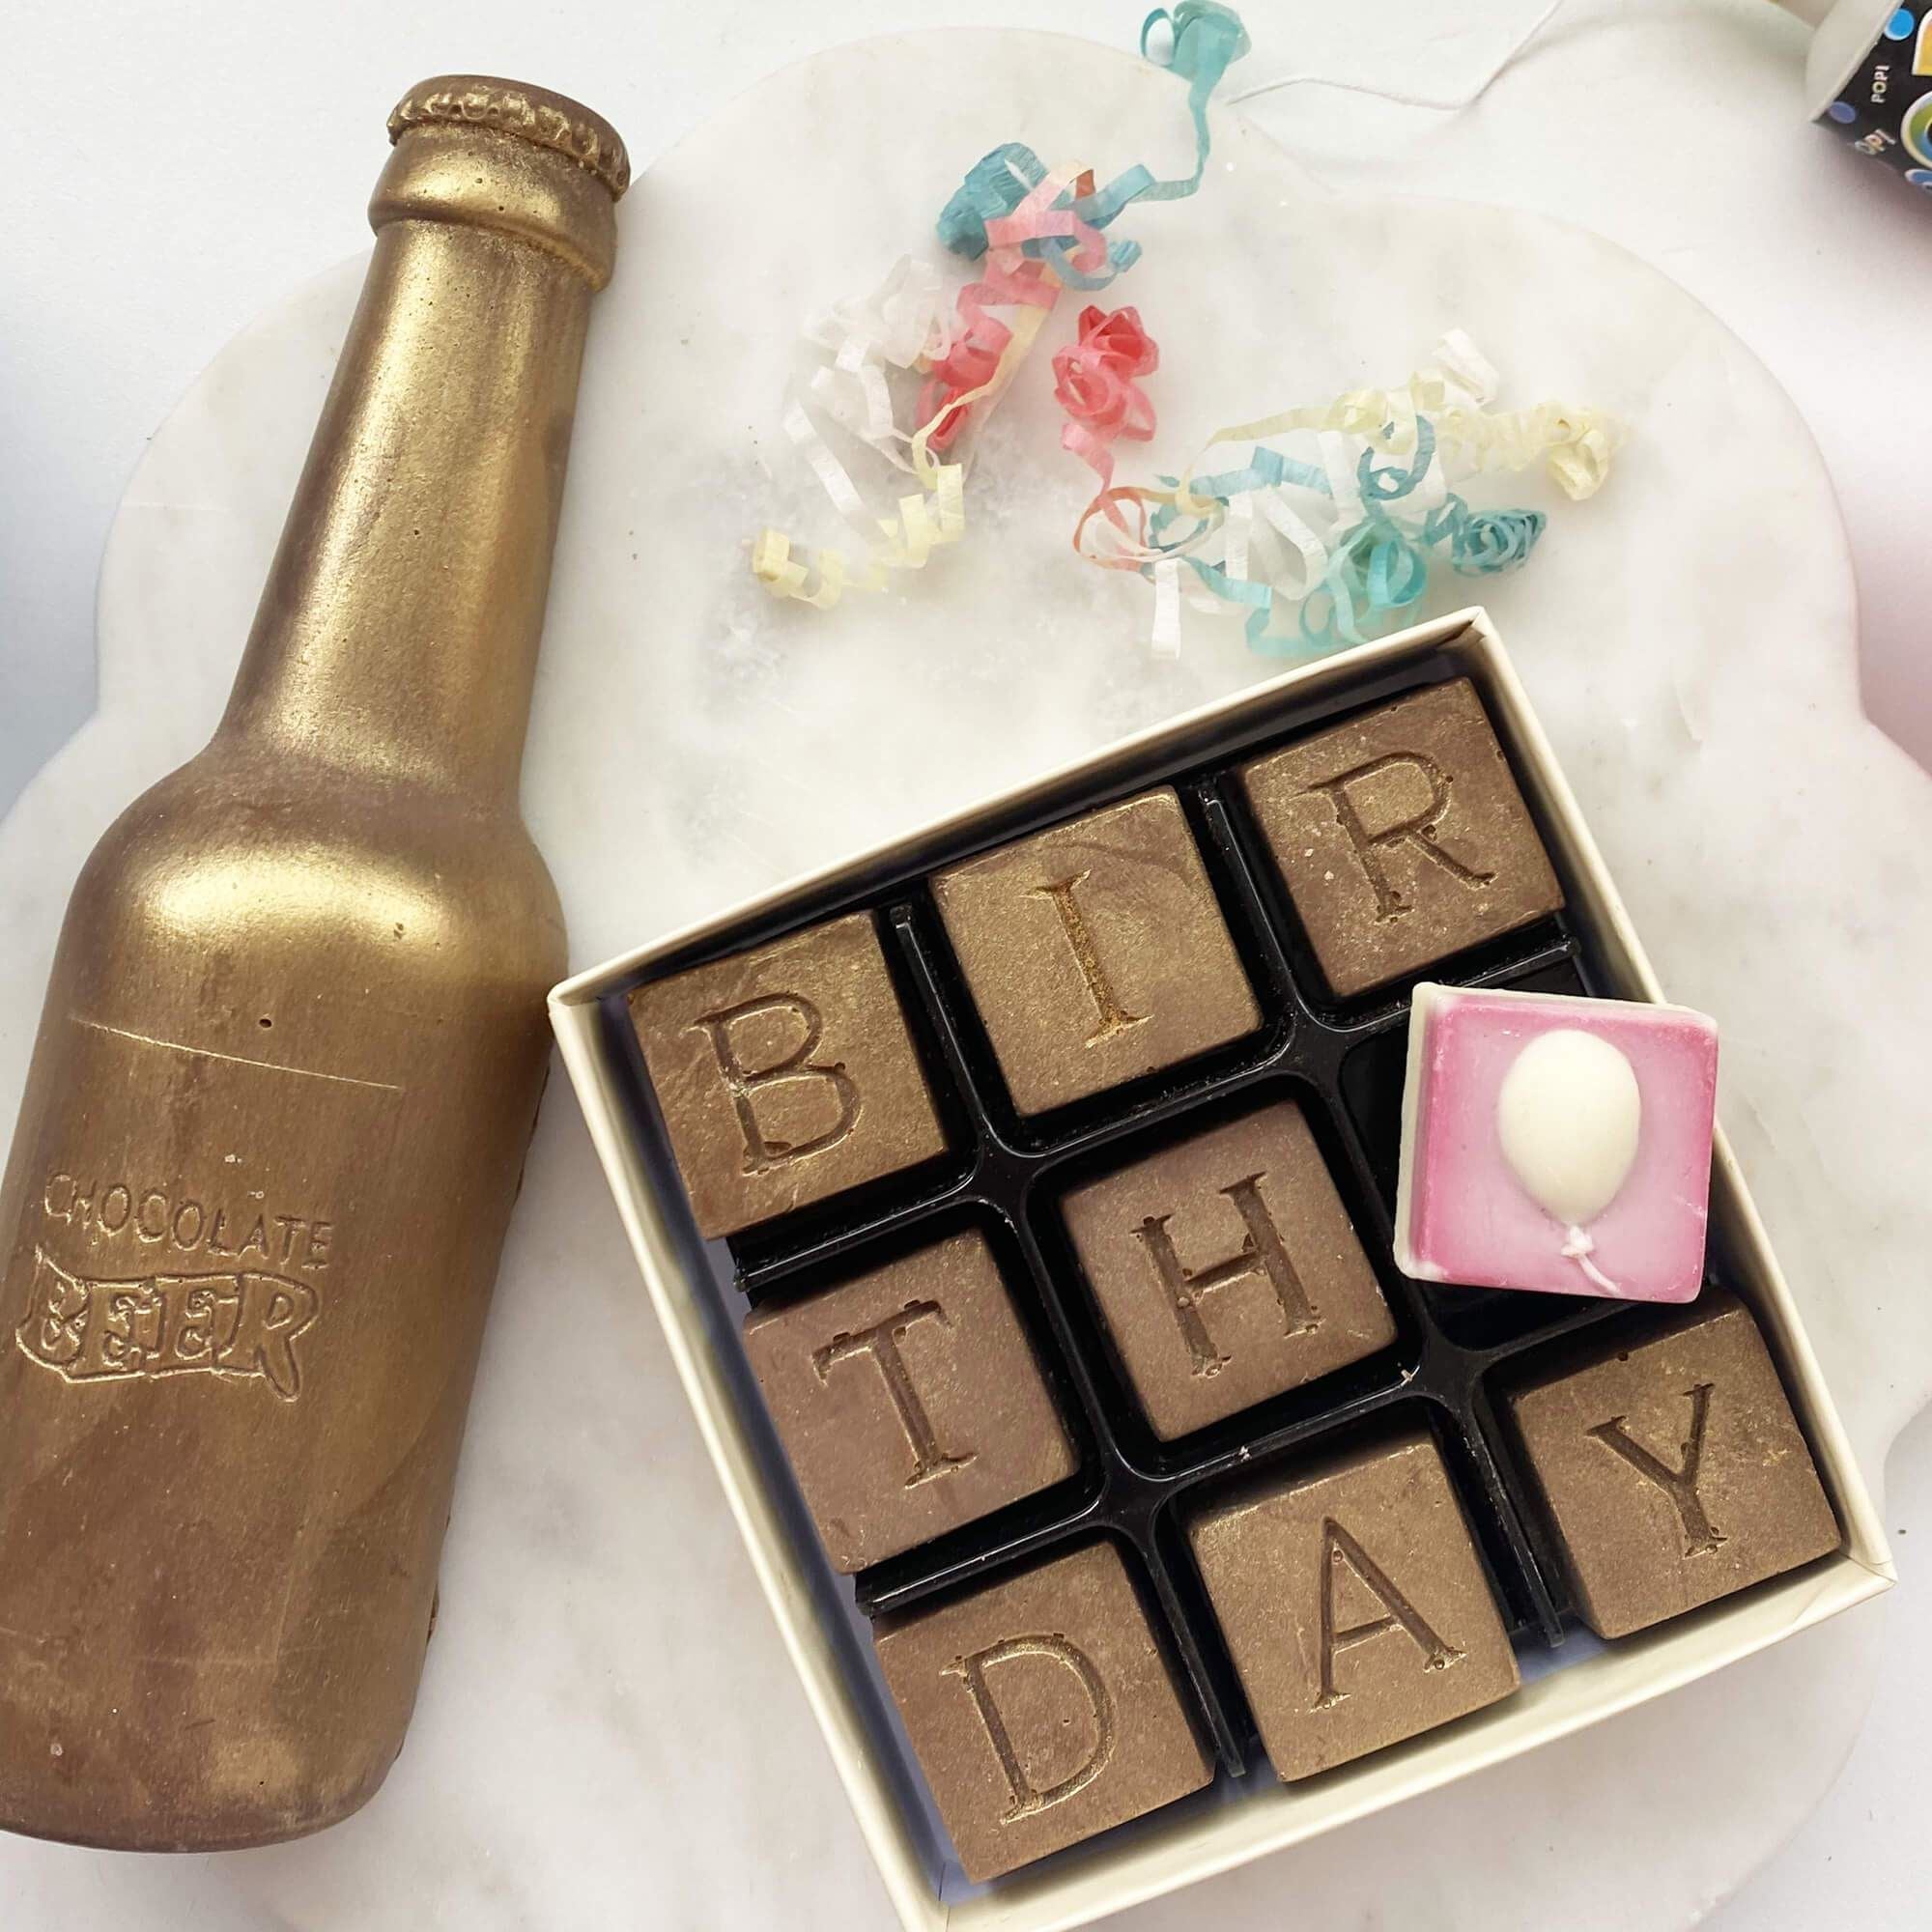 Chocolate Birthday And Beer Gift Box